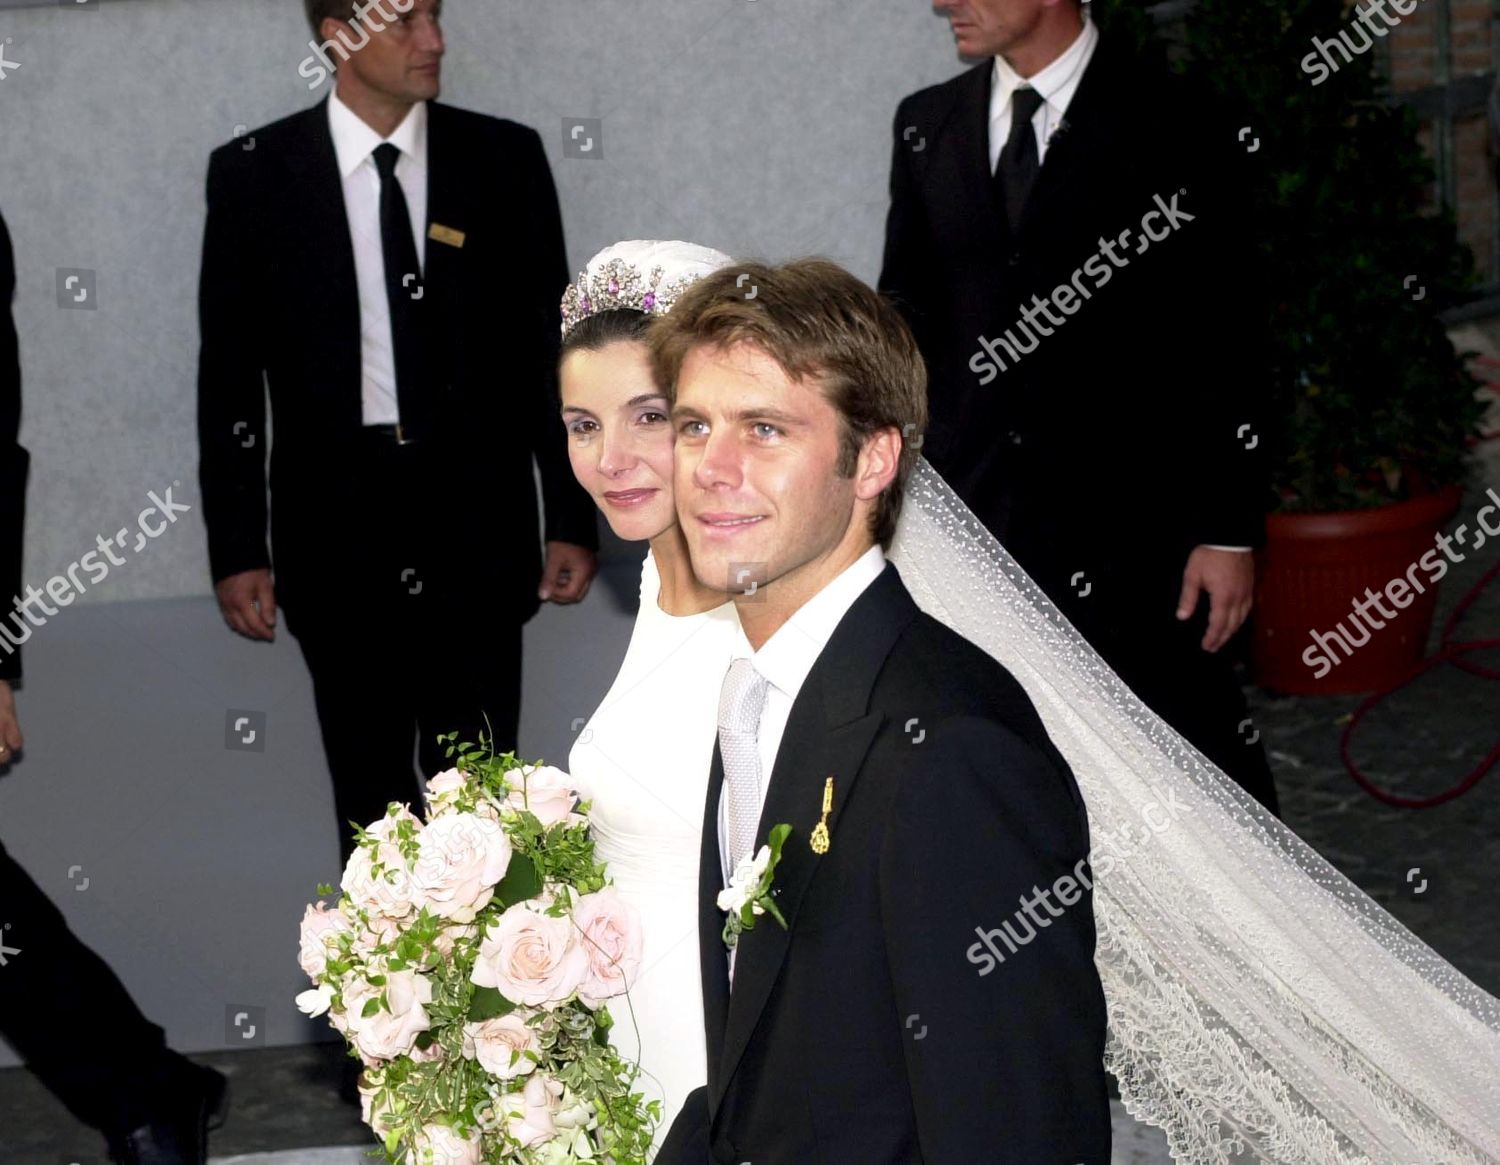 the-wedding-of-prince-emanuele-filiberto-di-savoia-to-clotilde-courau-rome-italy-shutterstock-editorial-429672v.jpg